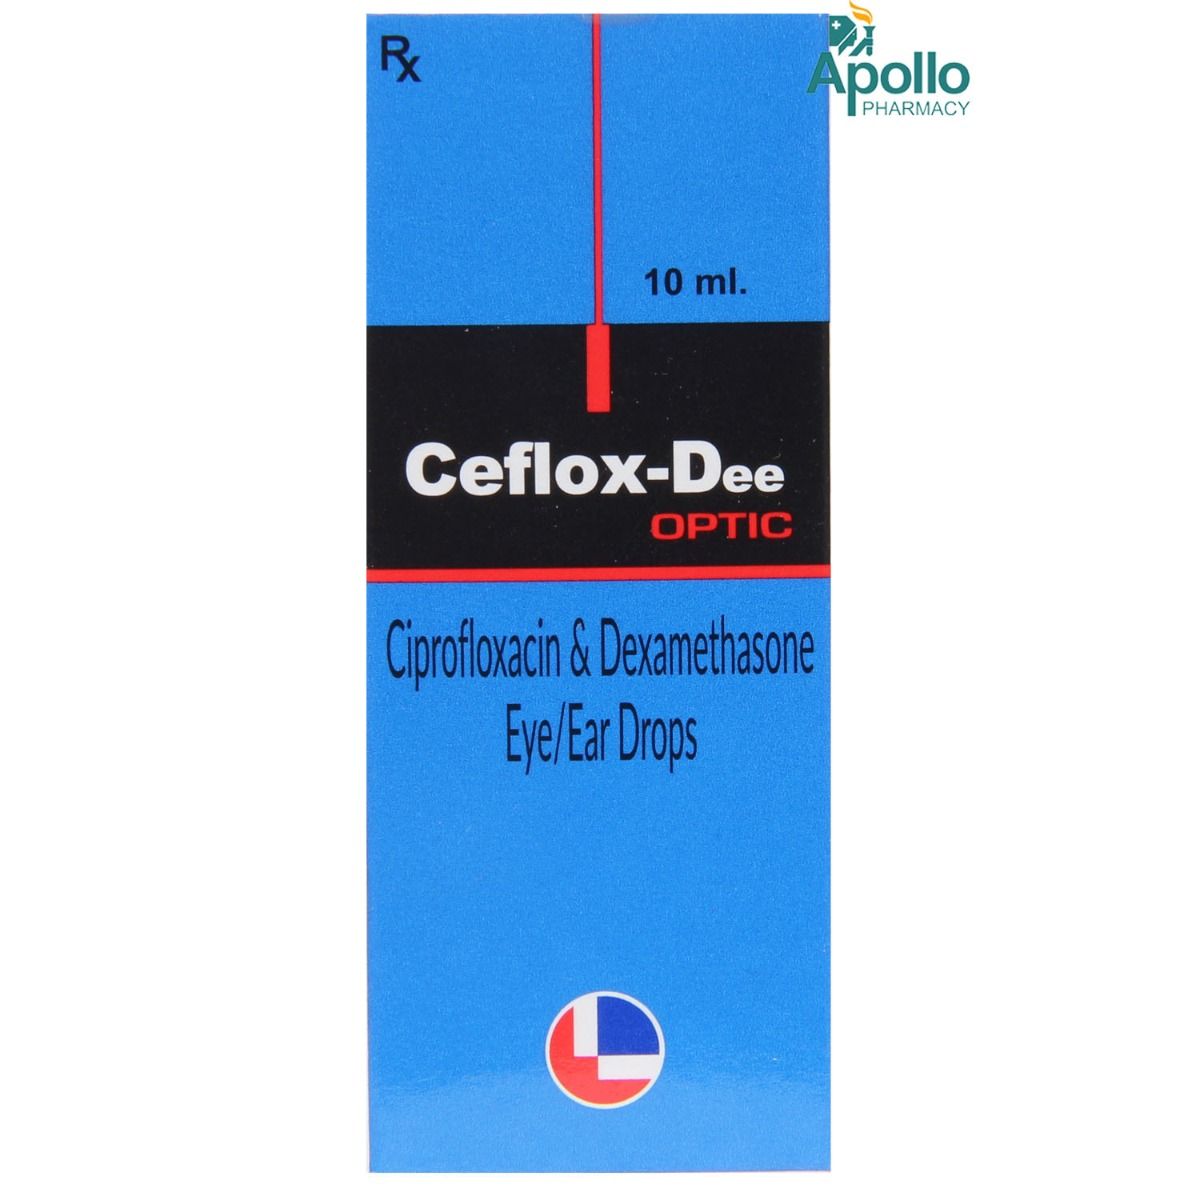 Ceflox Dee Optic Eye/Ear Drops 10 ml, Pack of 1 EYE/EAR DROPS